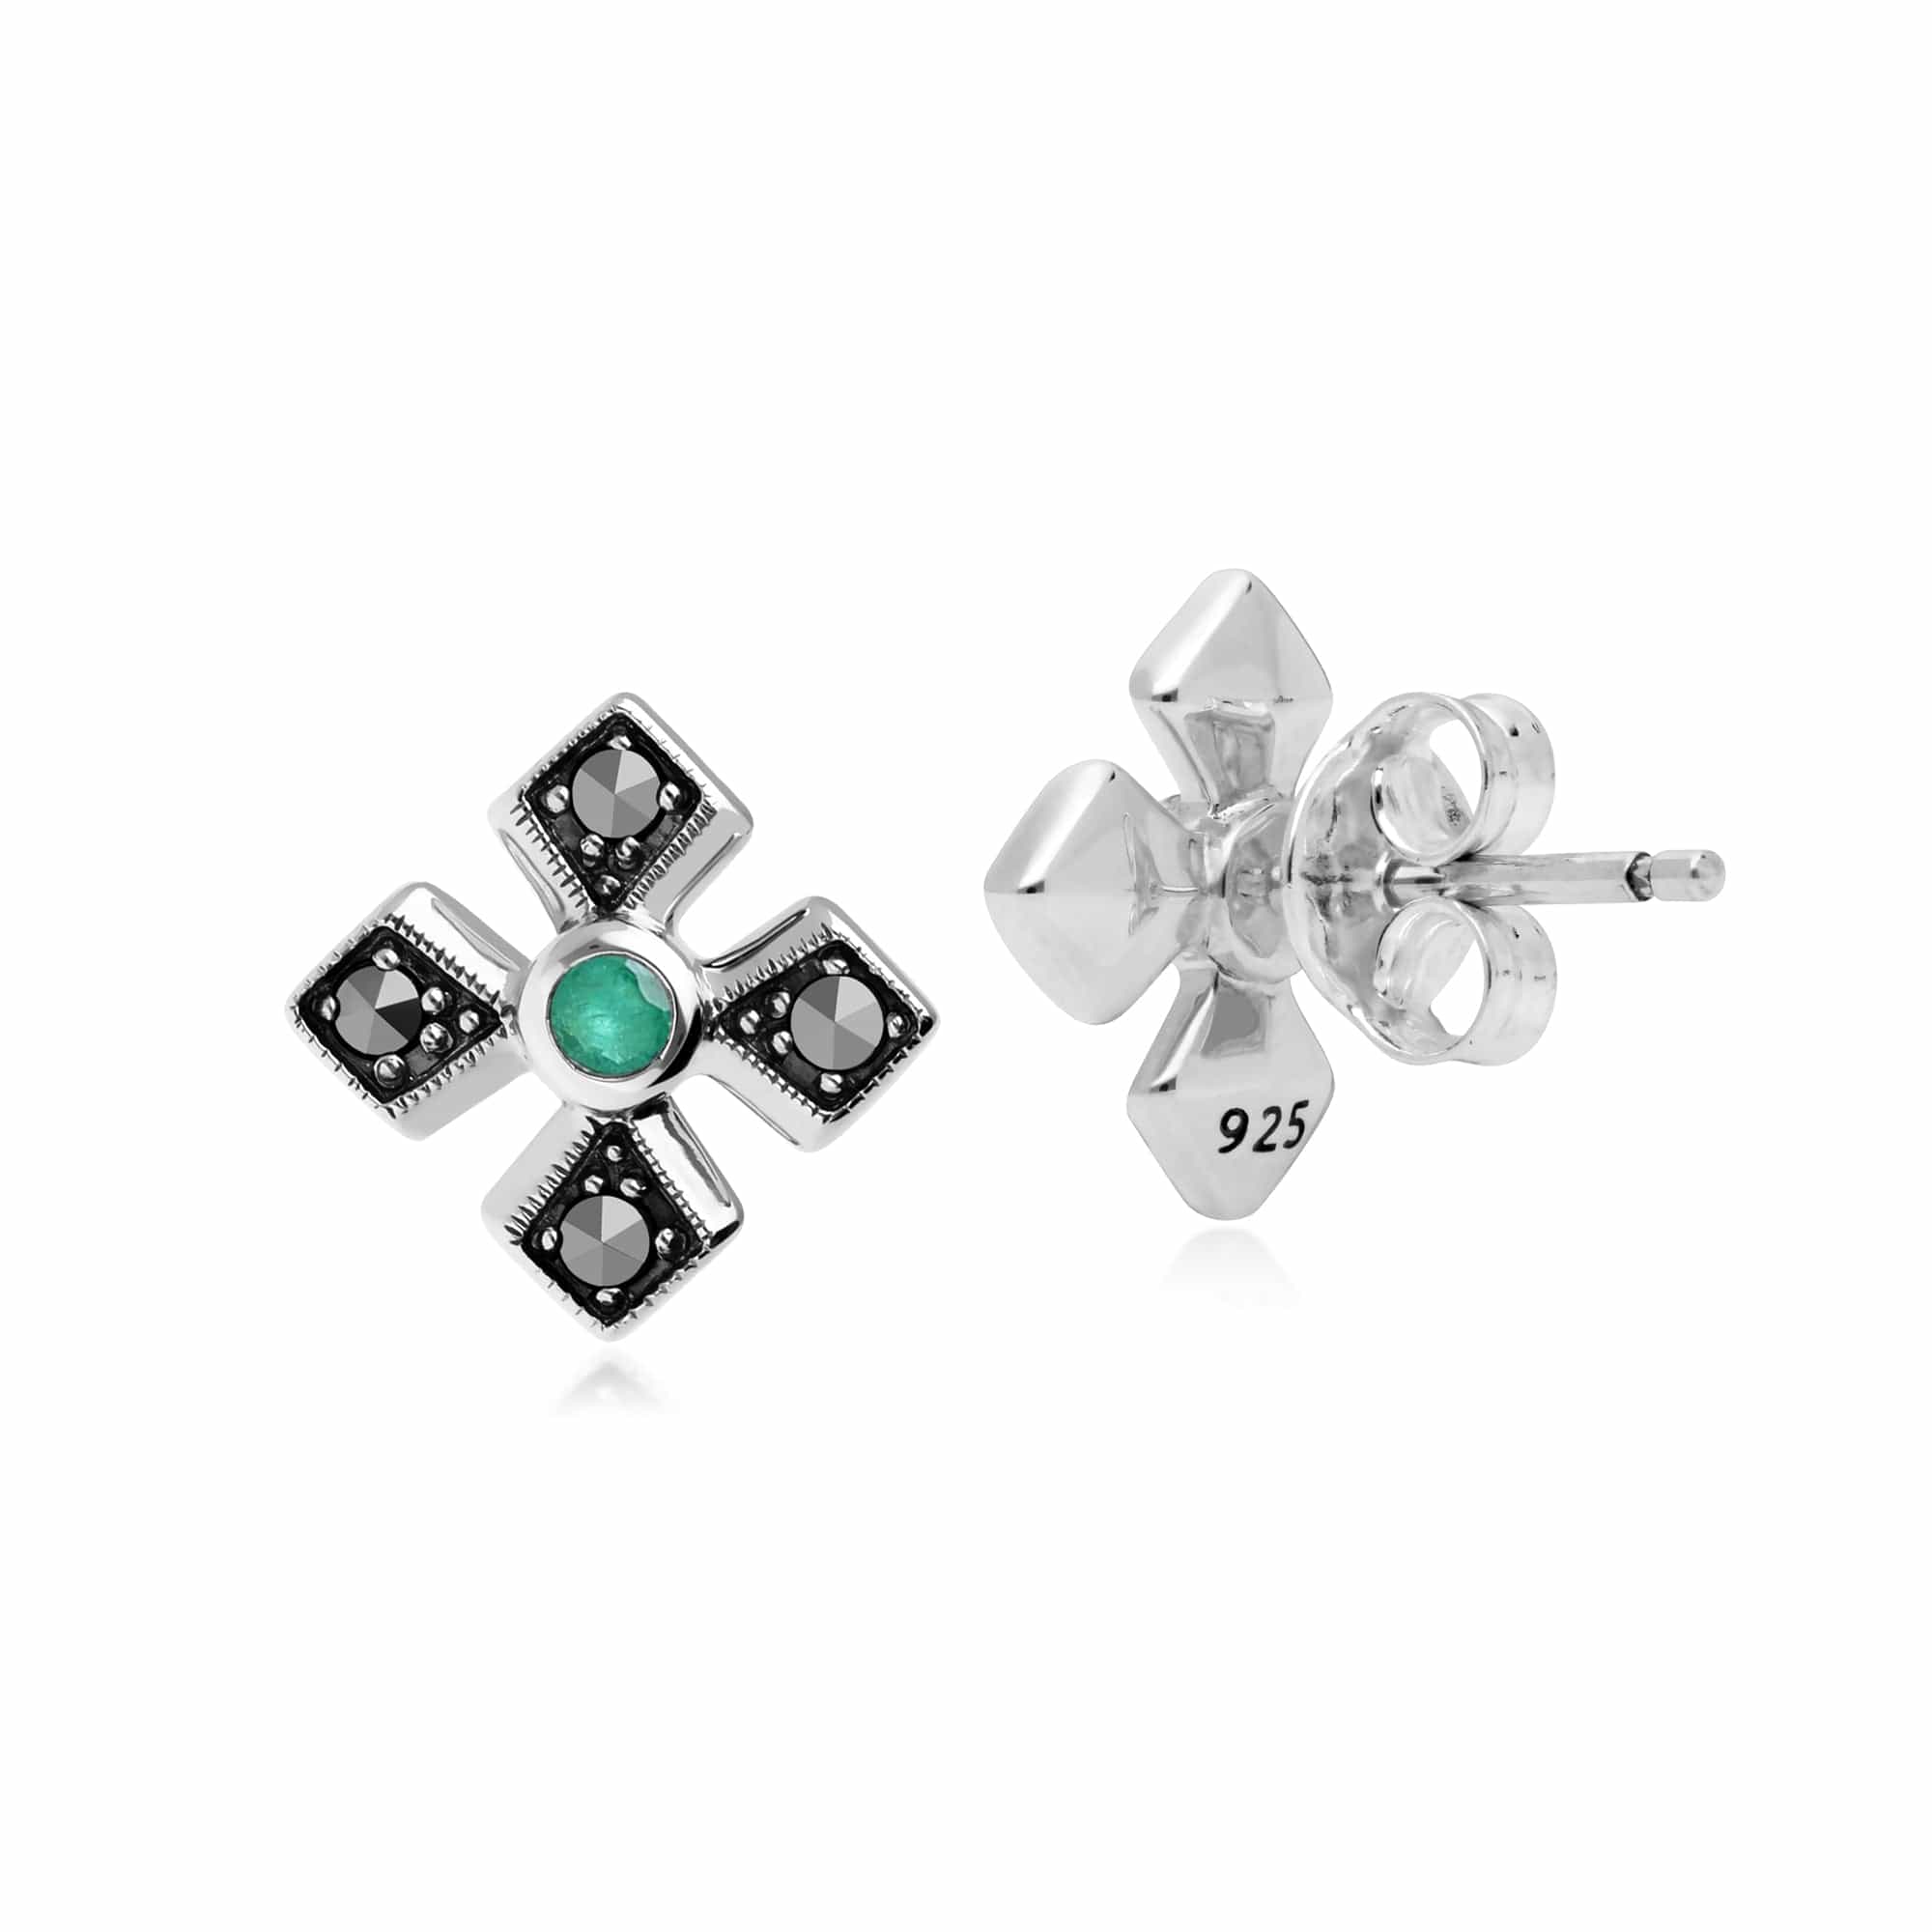 214E859703925 Gemondo Sterling Silver Marcasite & Emerald May Birthstone Earrings 2